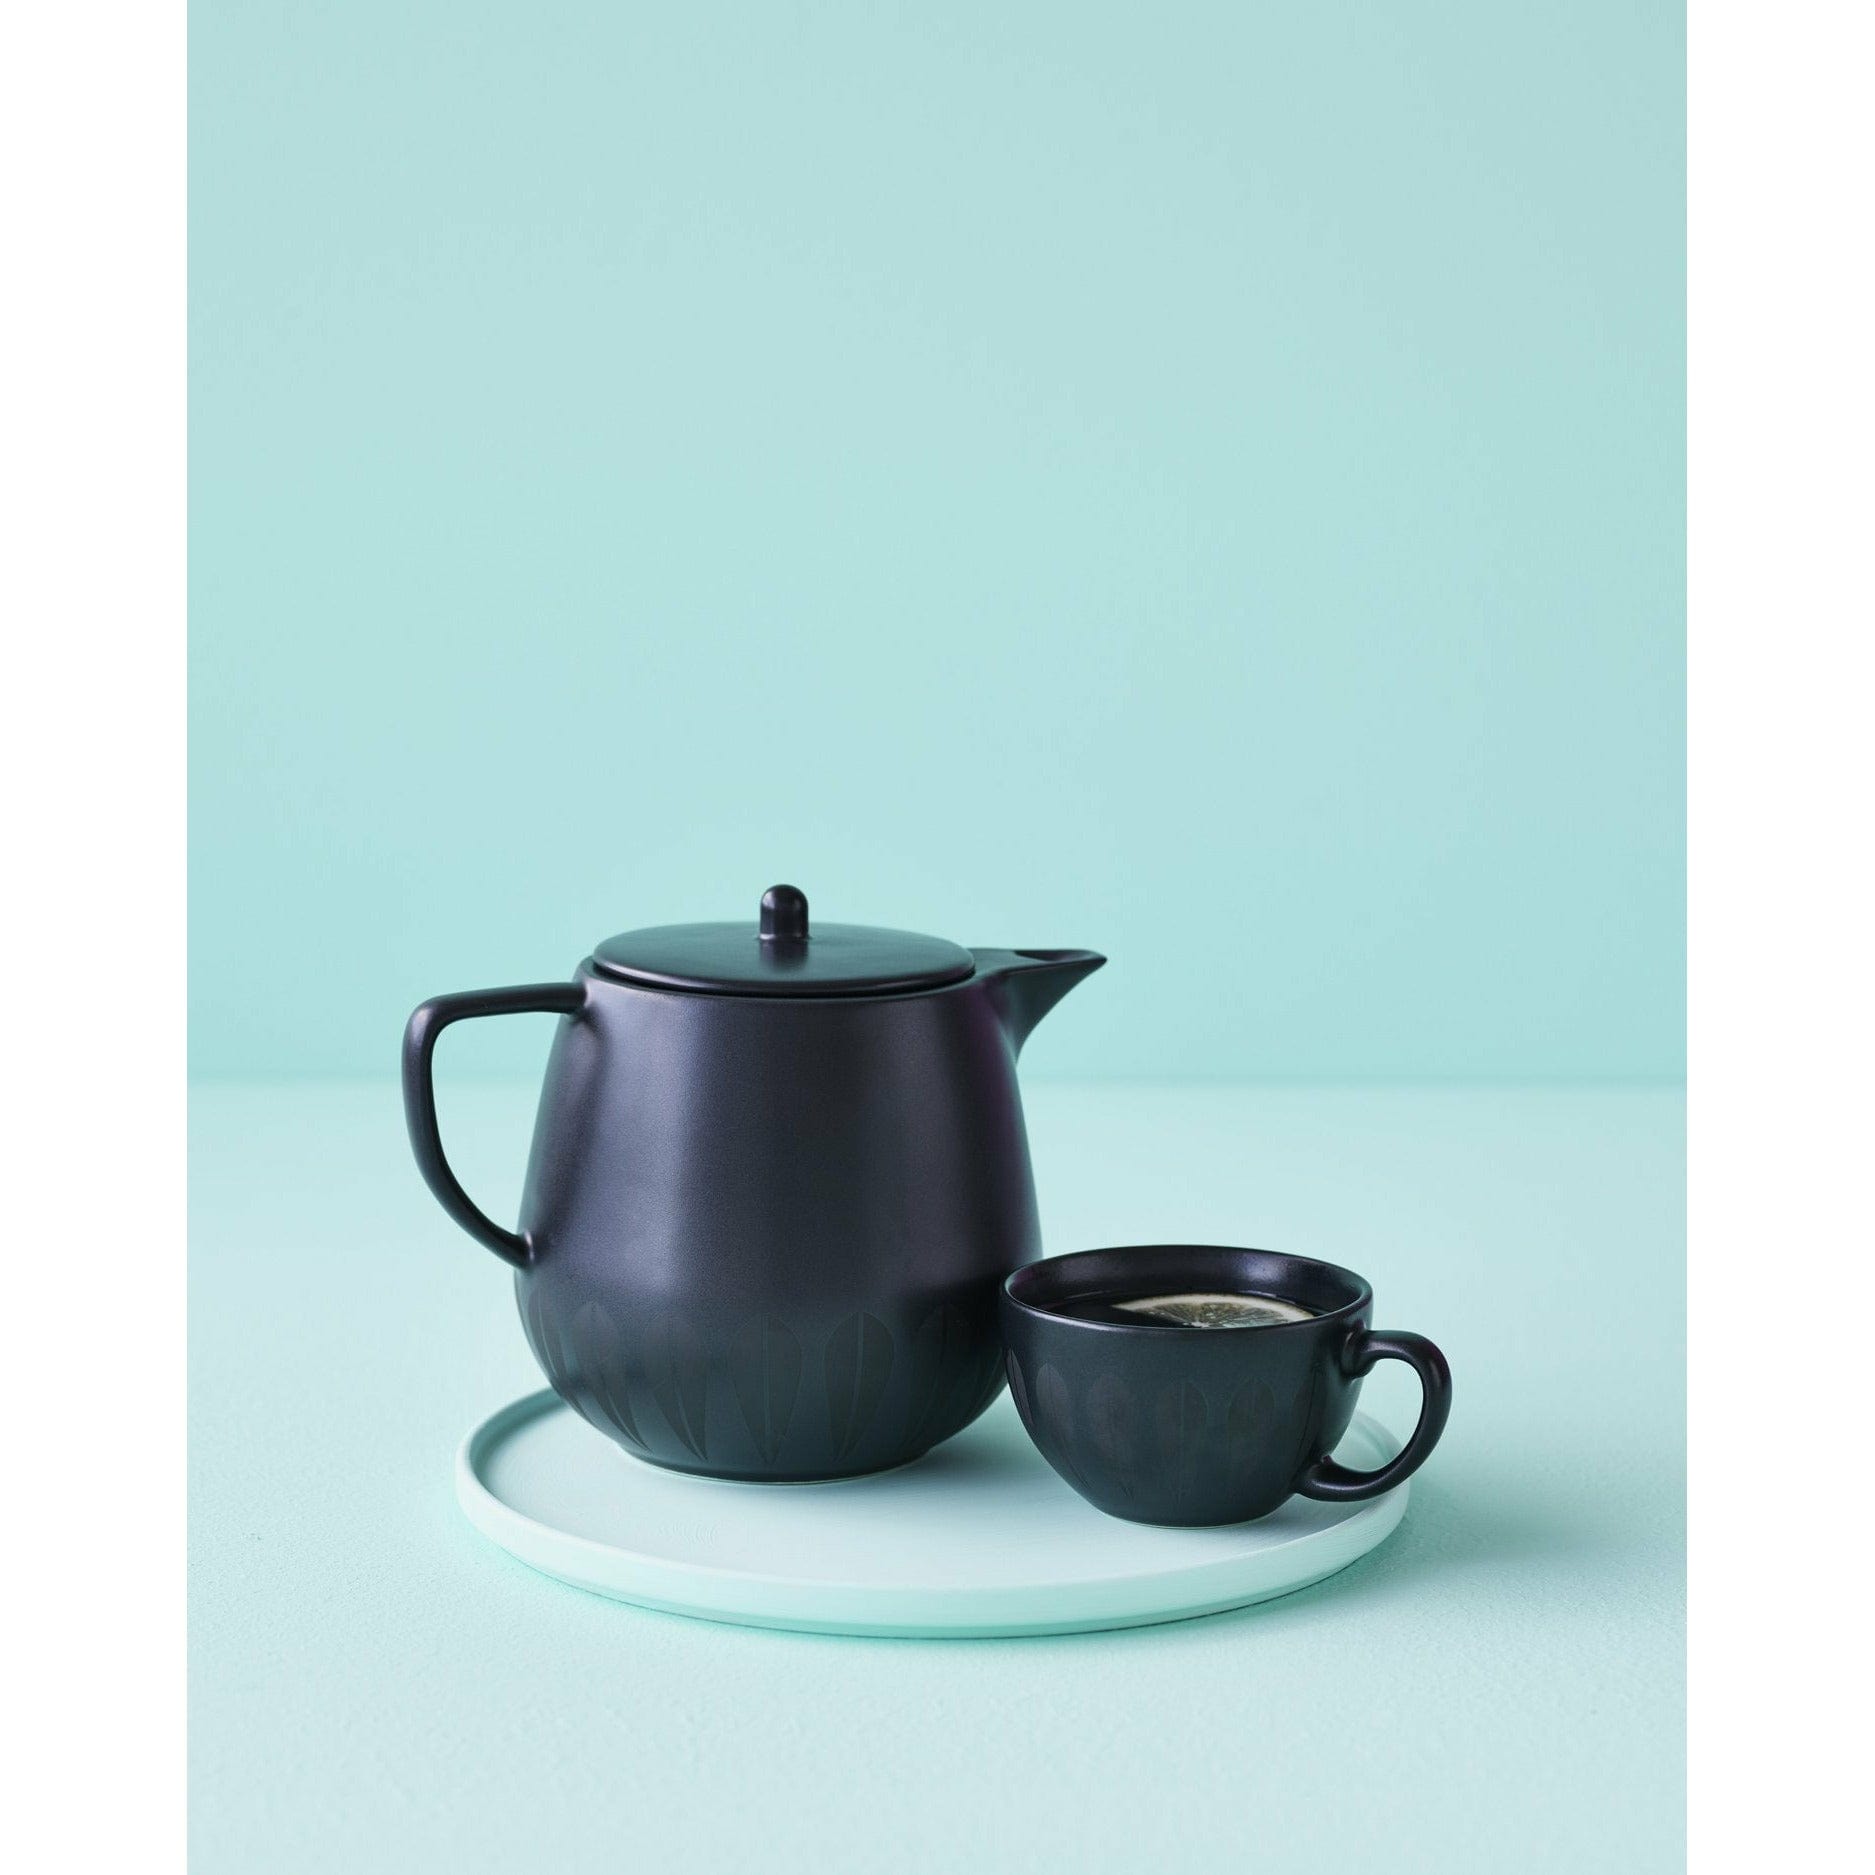 Lucie Kaas Arne Clausen Lotus Teapot, Black